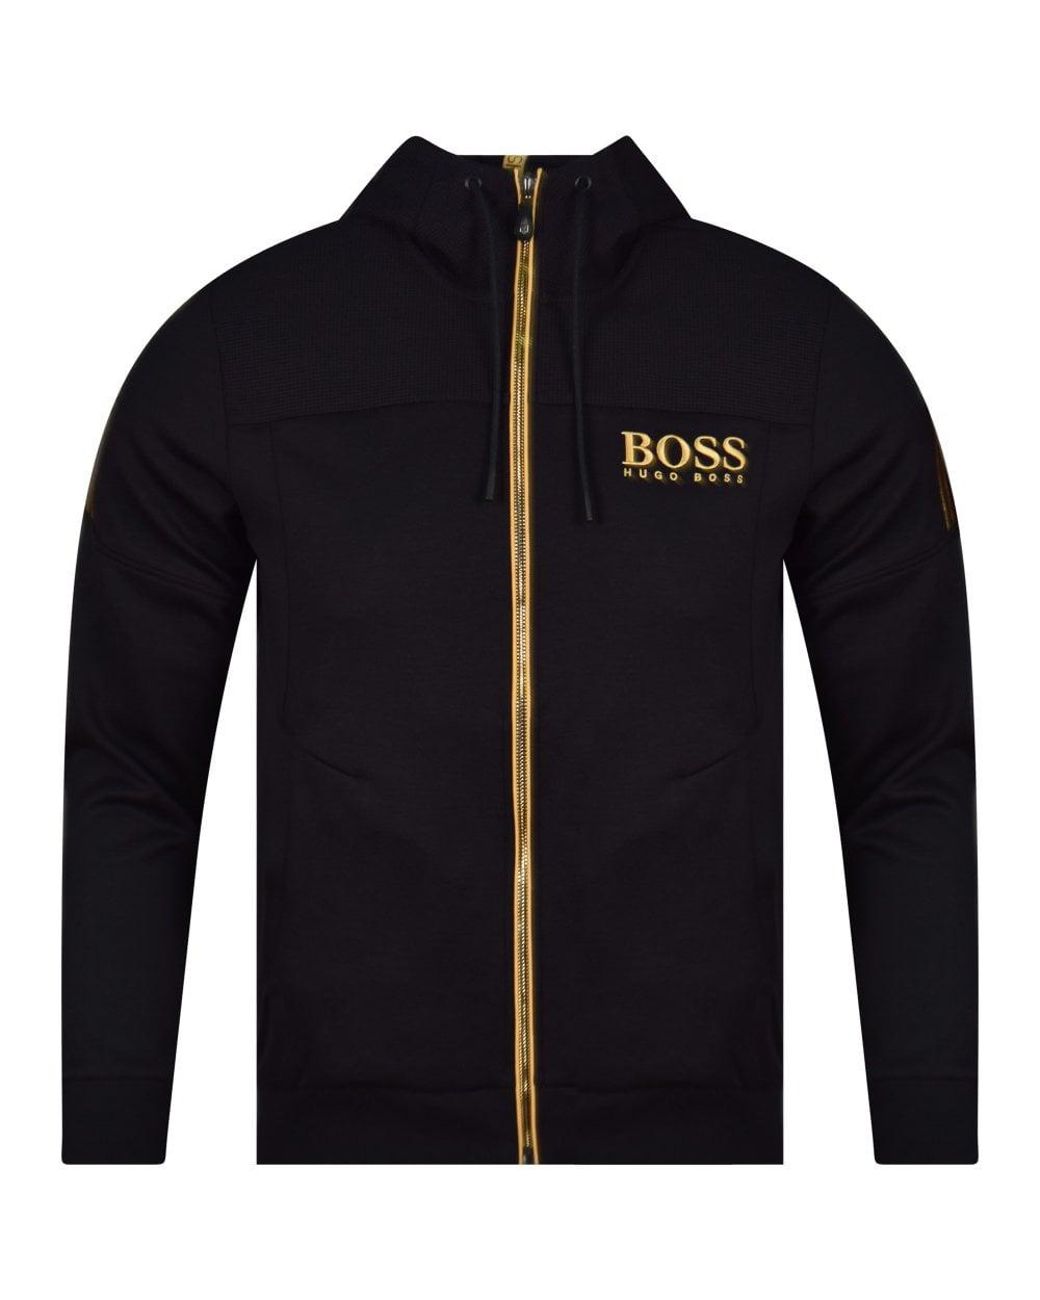 BOSS by Black/gold Logo Hoodie for Men | Lyst